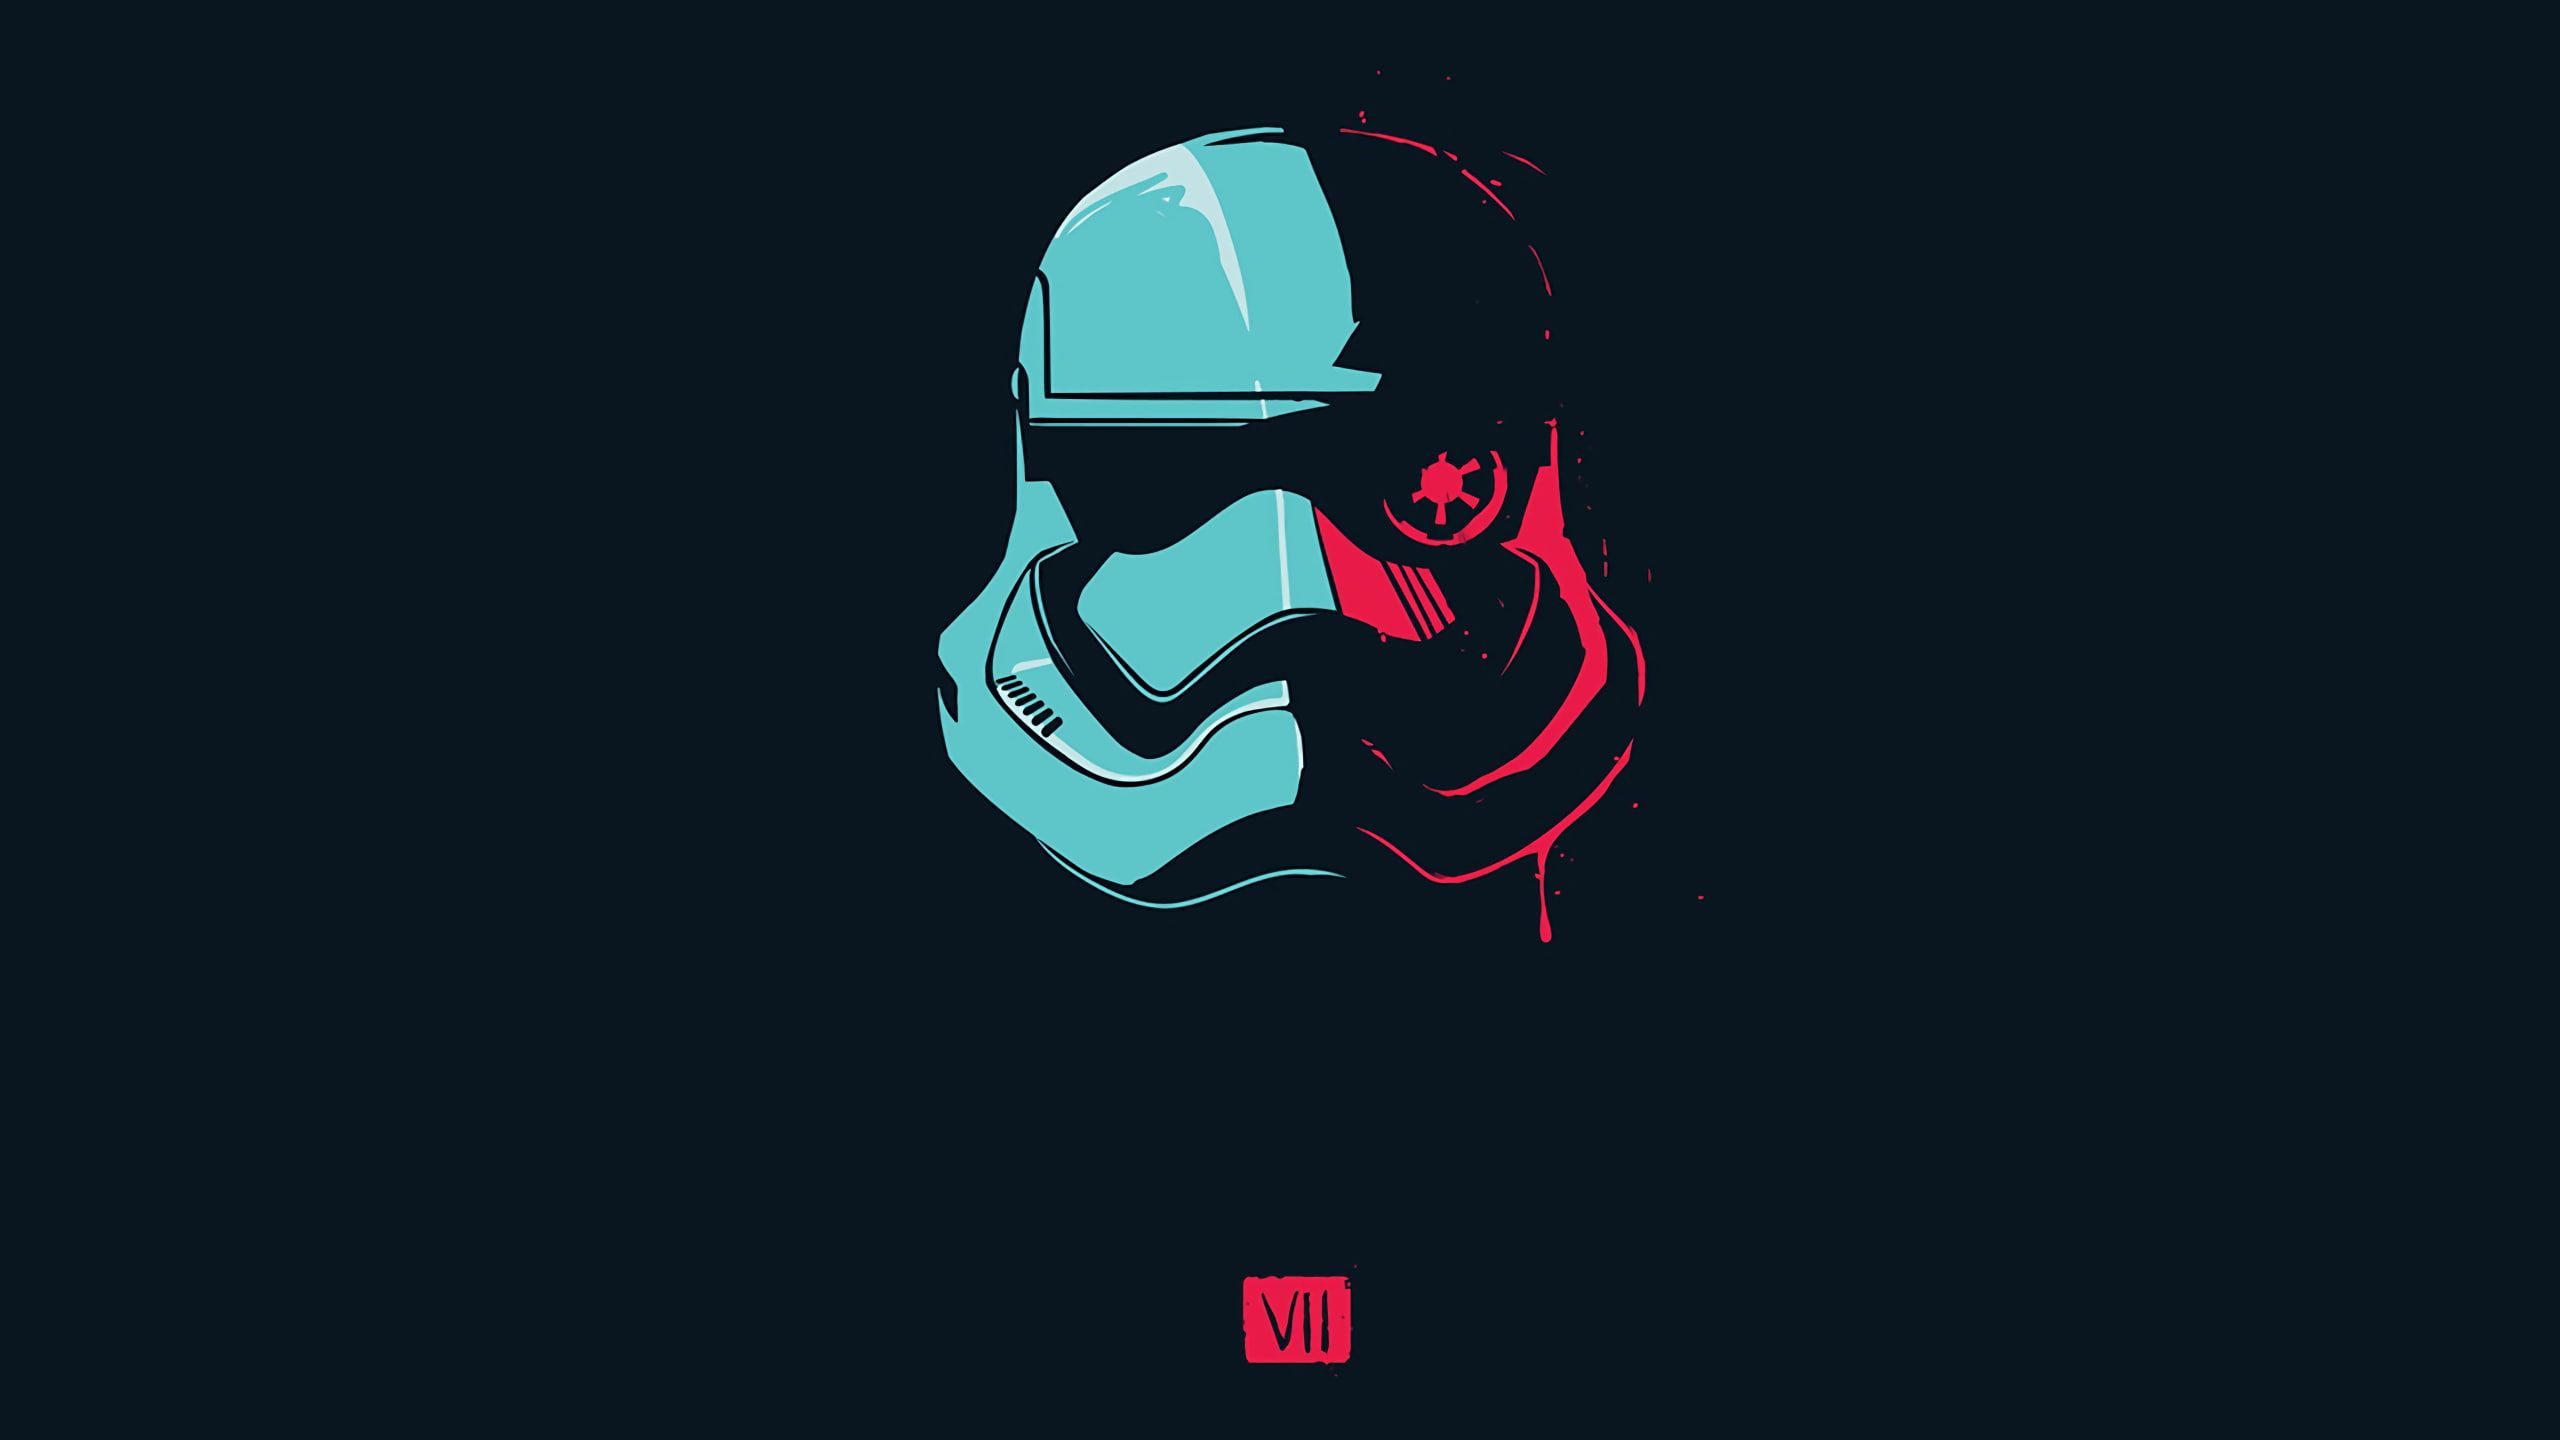 HD wallpaper: Darth Vader wallpaper, Star Wars, Star Wars: The Force Awakens